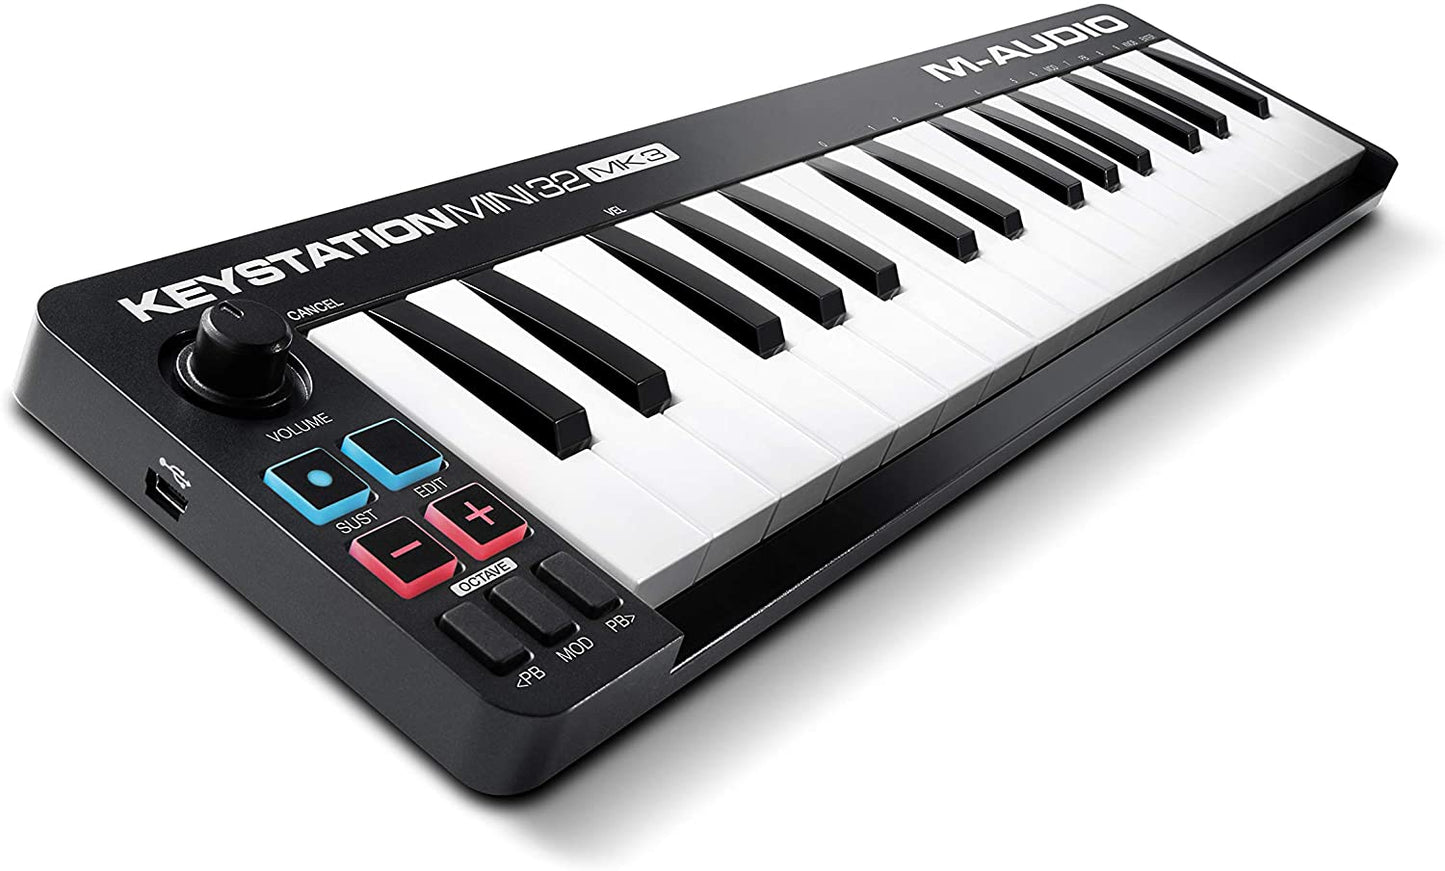 M-Audio Keystation Mini2 32 MK3 | Ultra Portable Mini USB MIDI Keyboard Controller | M Audio Edition and Xpand 2 by AIR Music Tech